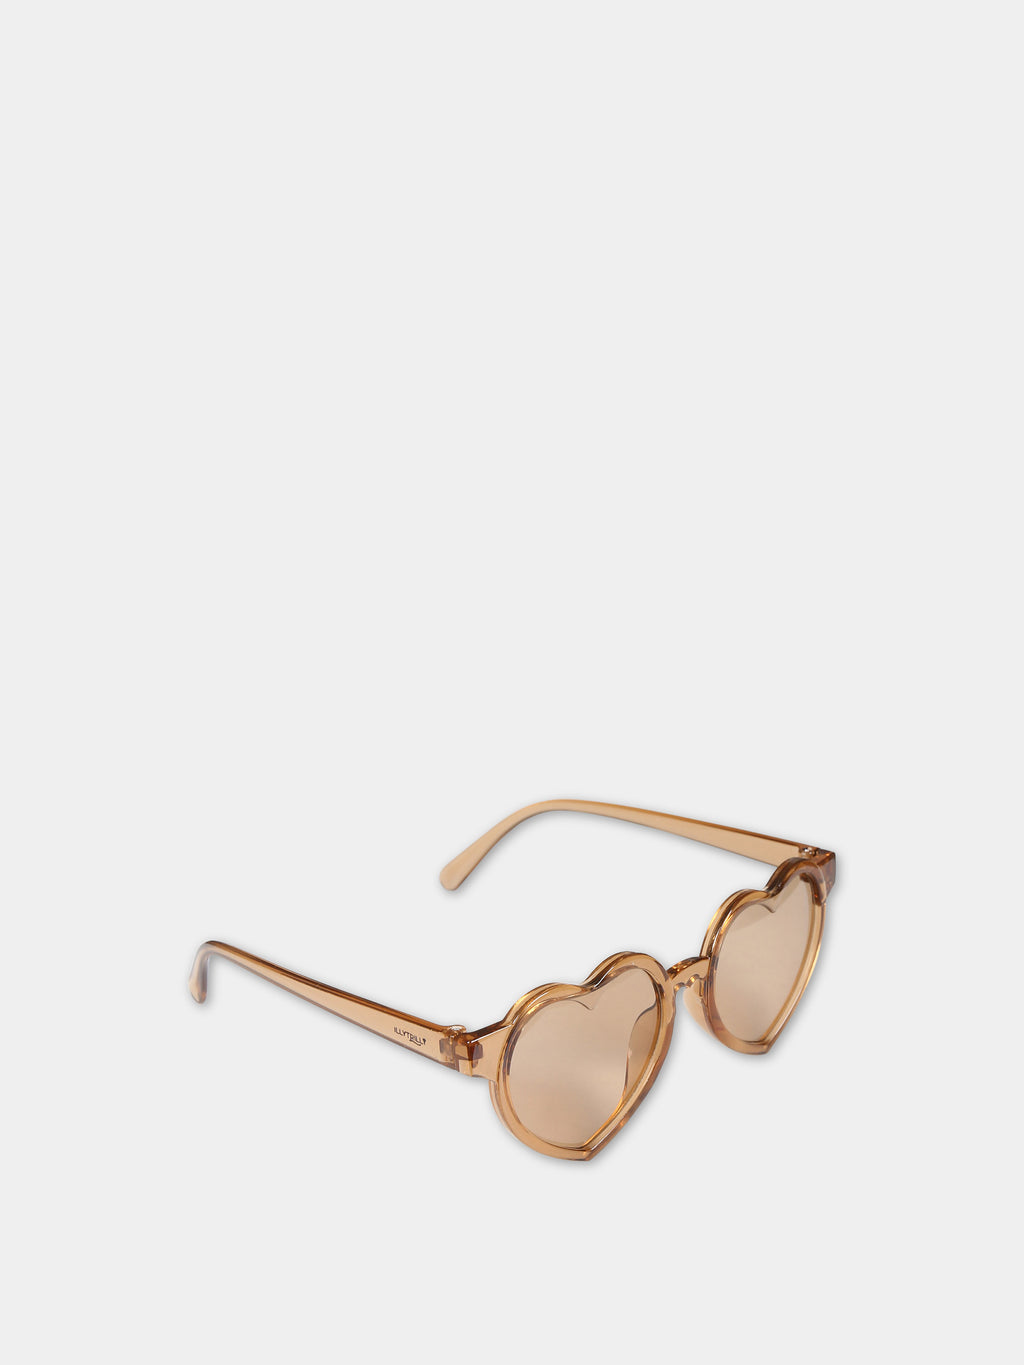 Brown sunglasses for girl